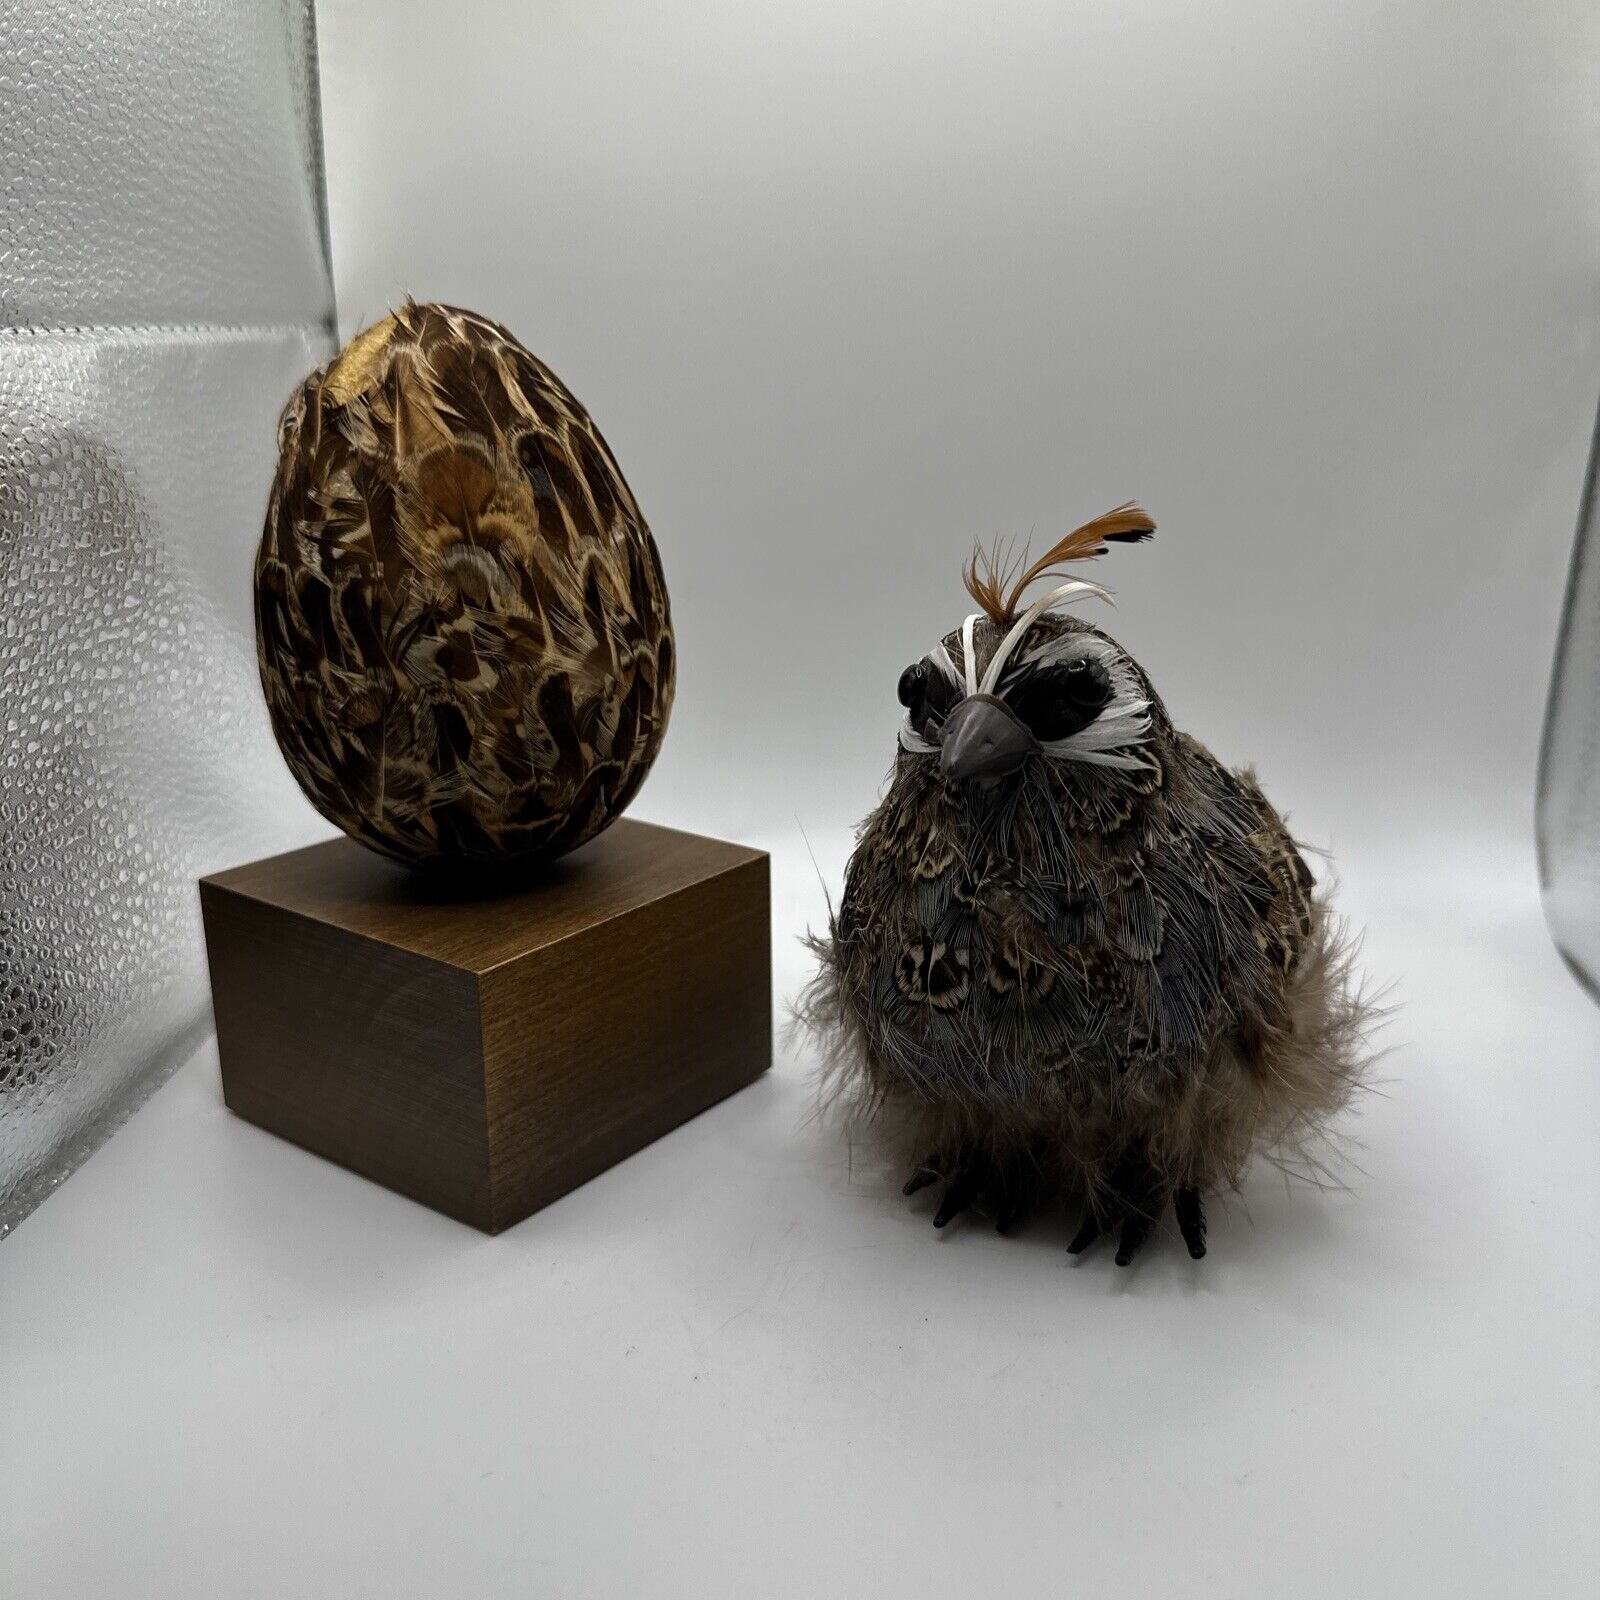 Vintage Feather Egg Display And Bird Figurine